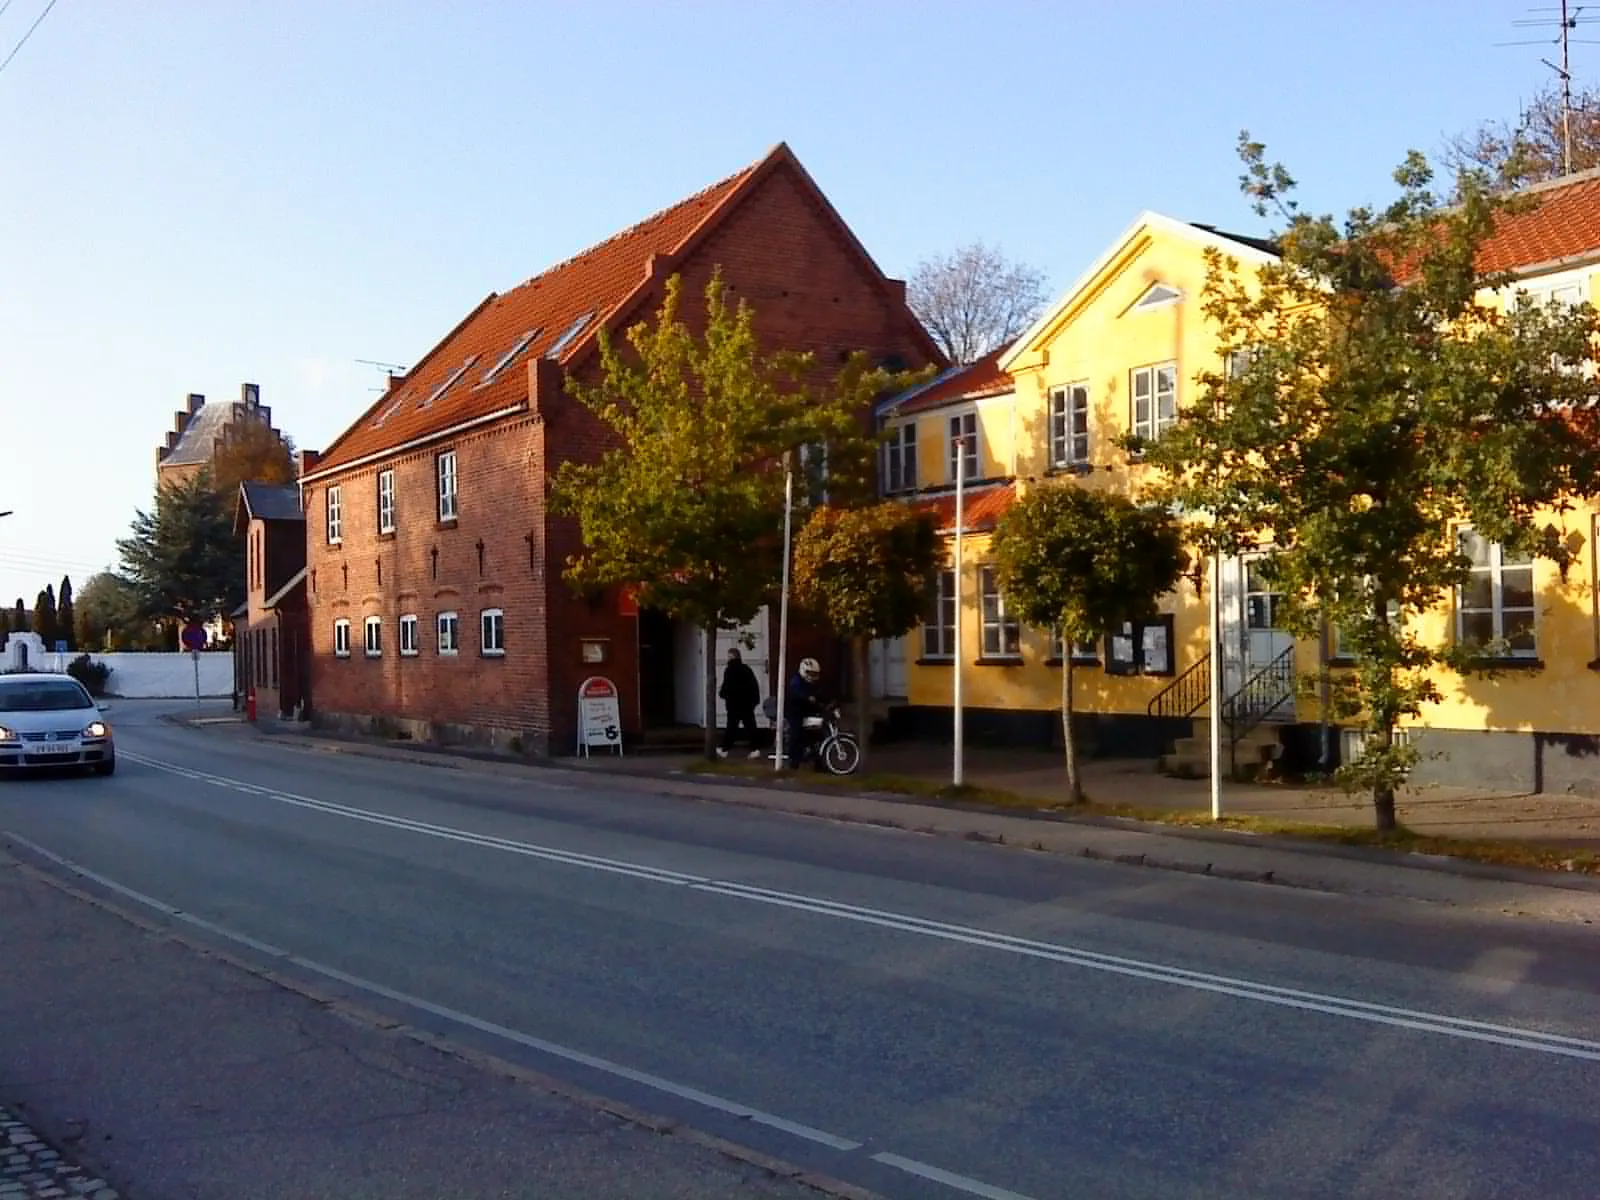 Photo showing: Græsted Inn and church, Denmark